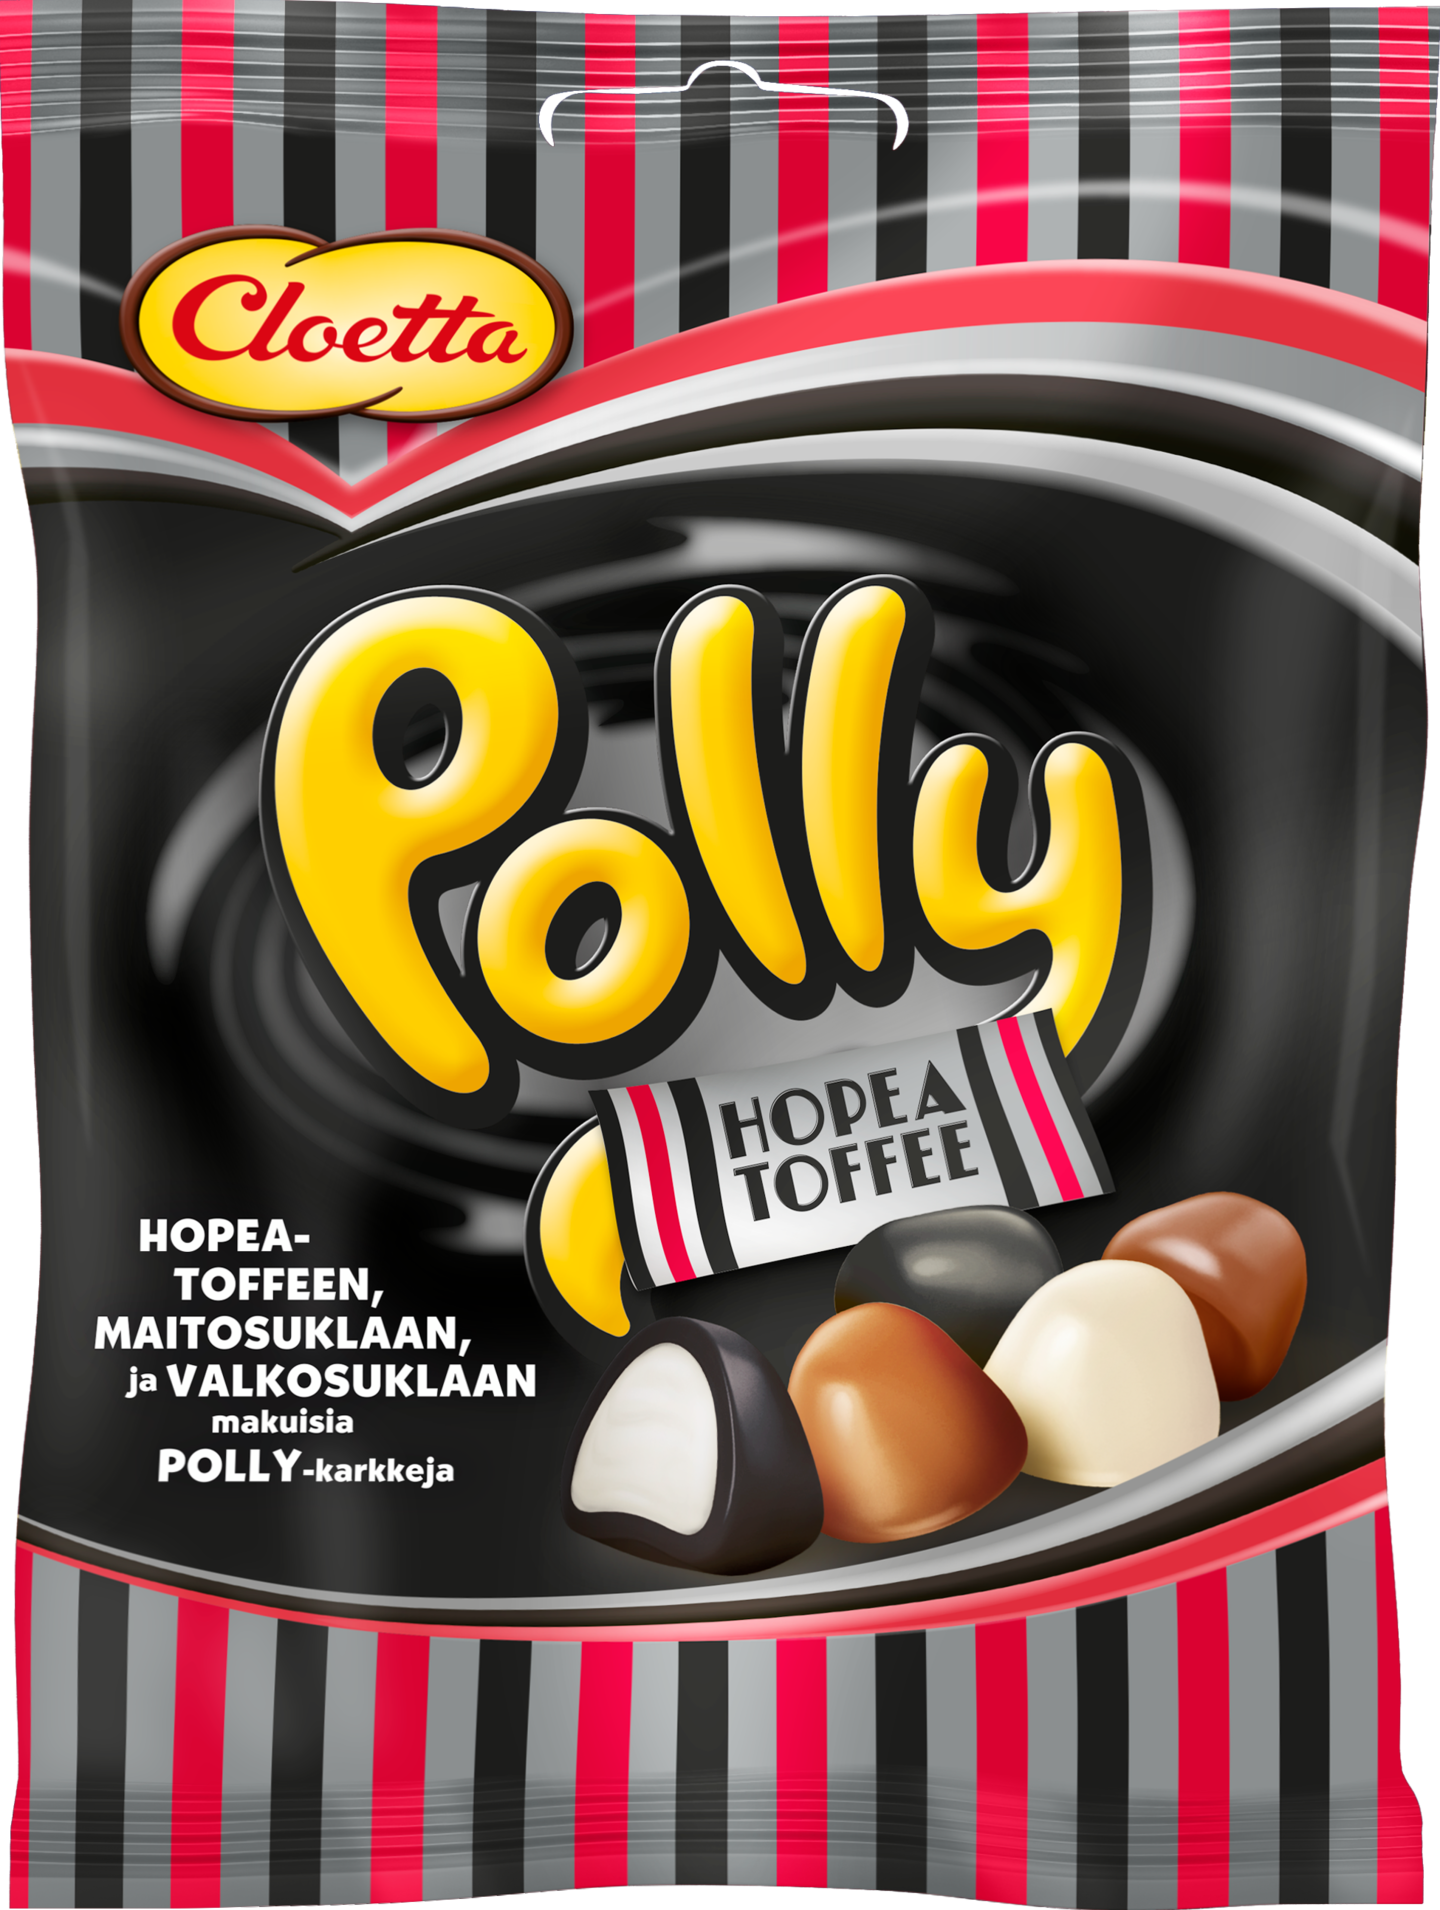 Cloetta Polly 180g Hopeatoffee